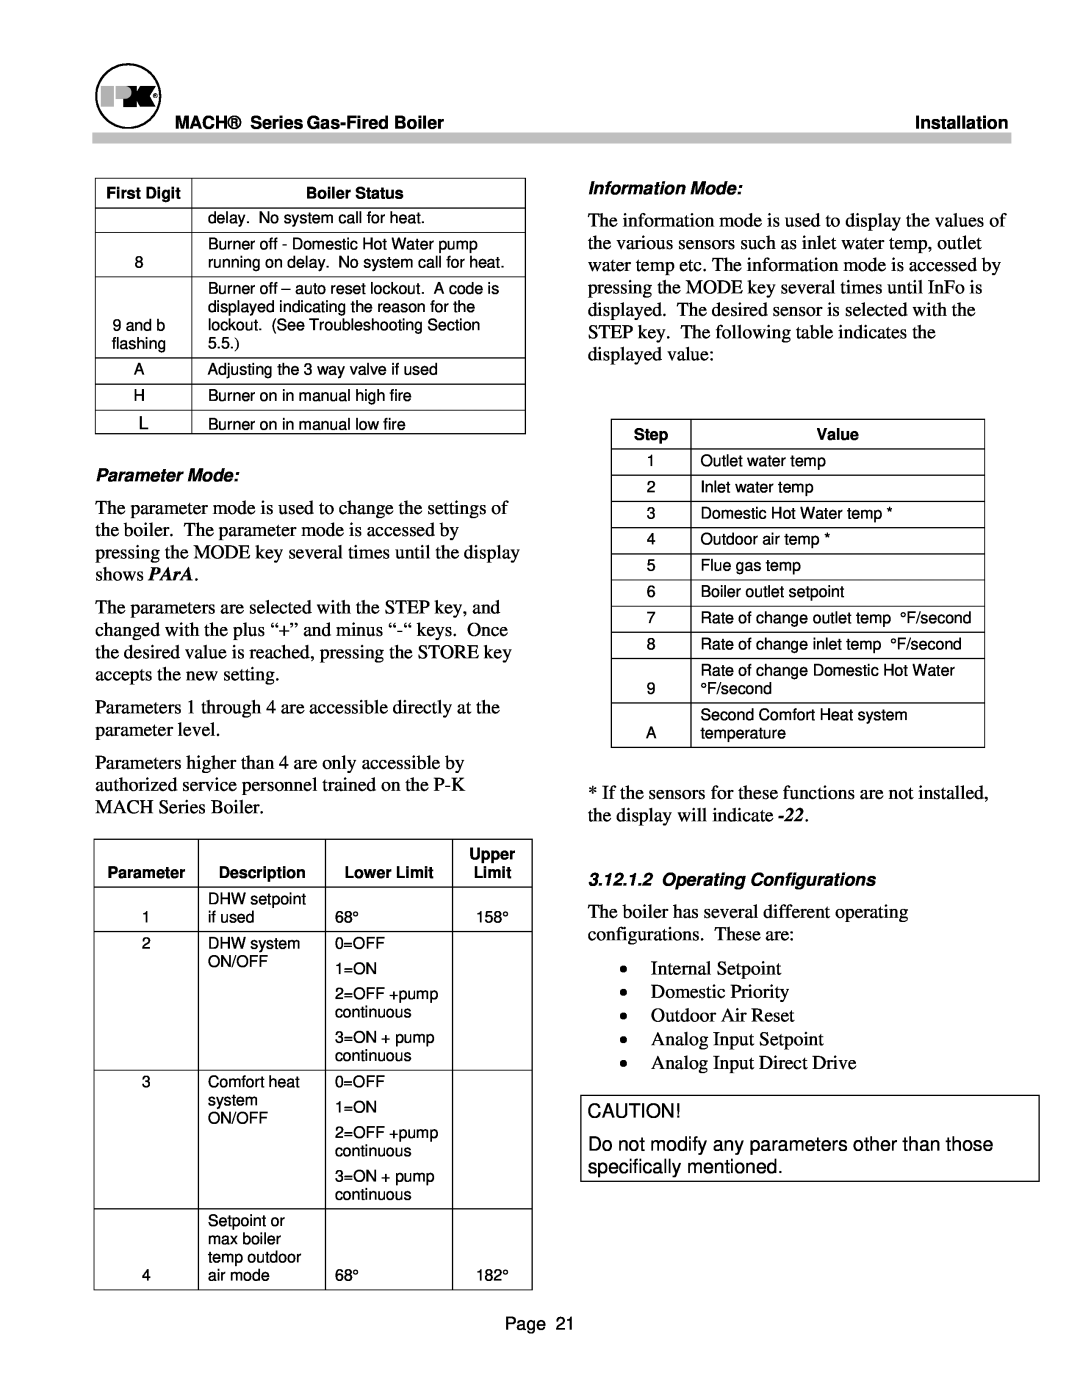 Patterson-Kelley MACH-05 manual Internal Setpoint Domestic Priority 